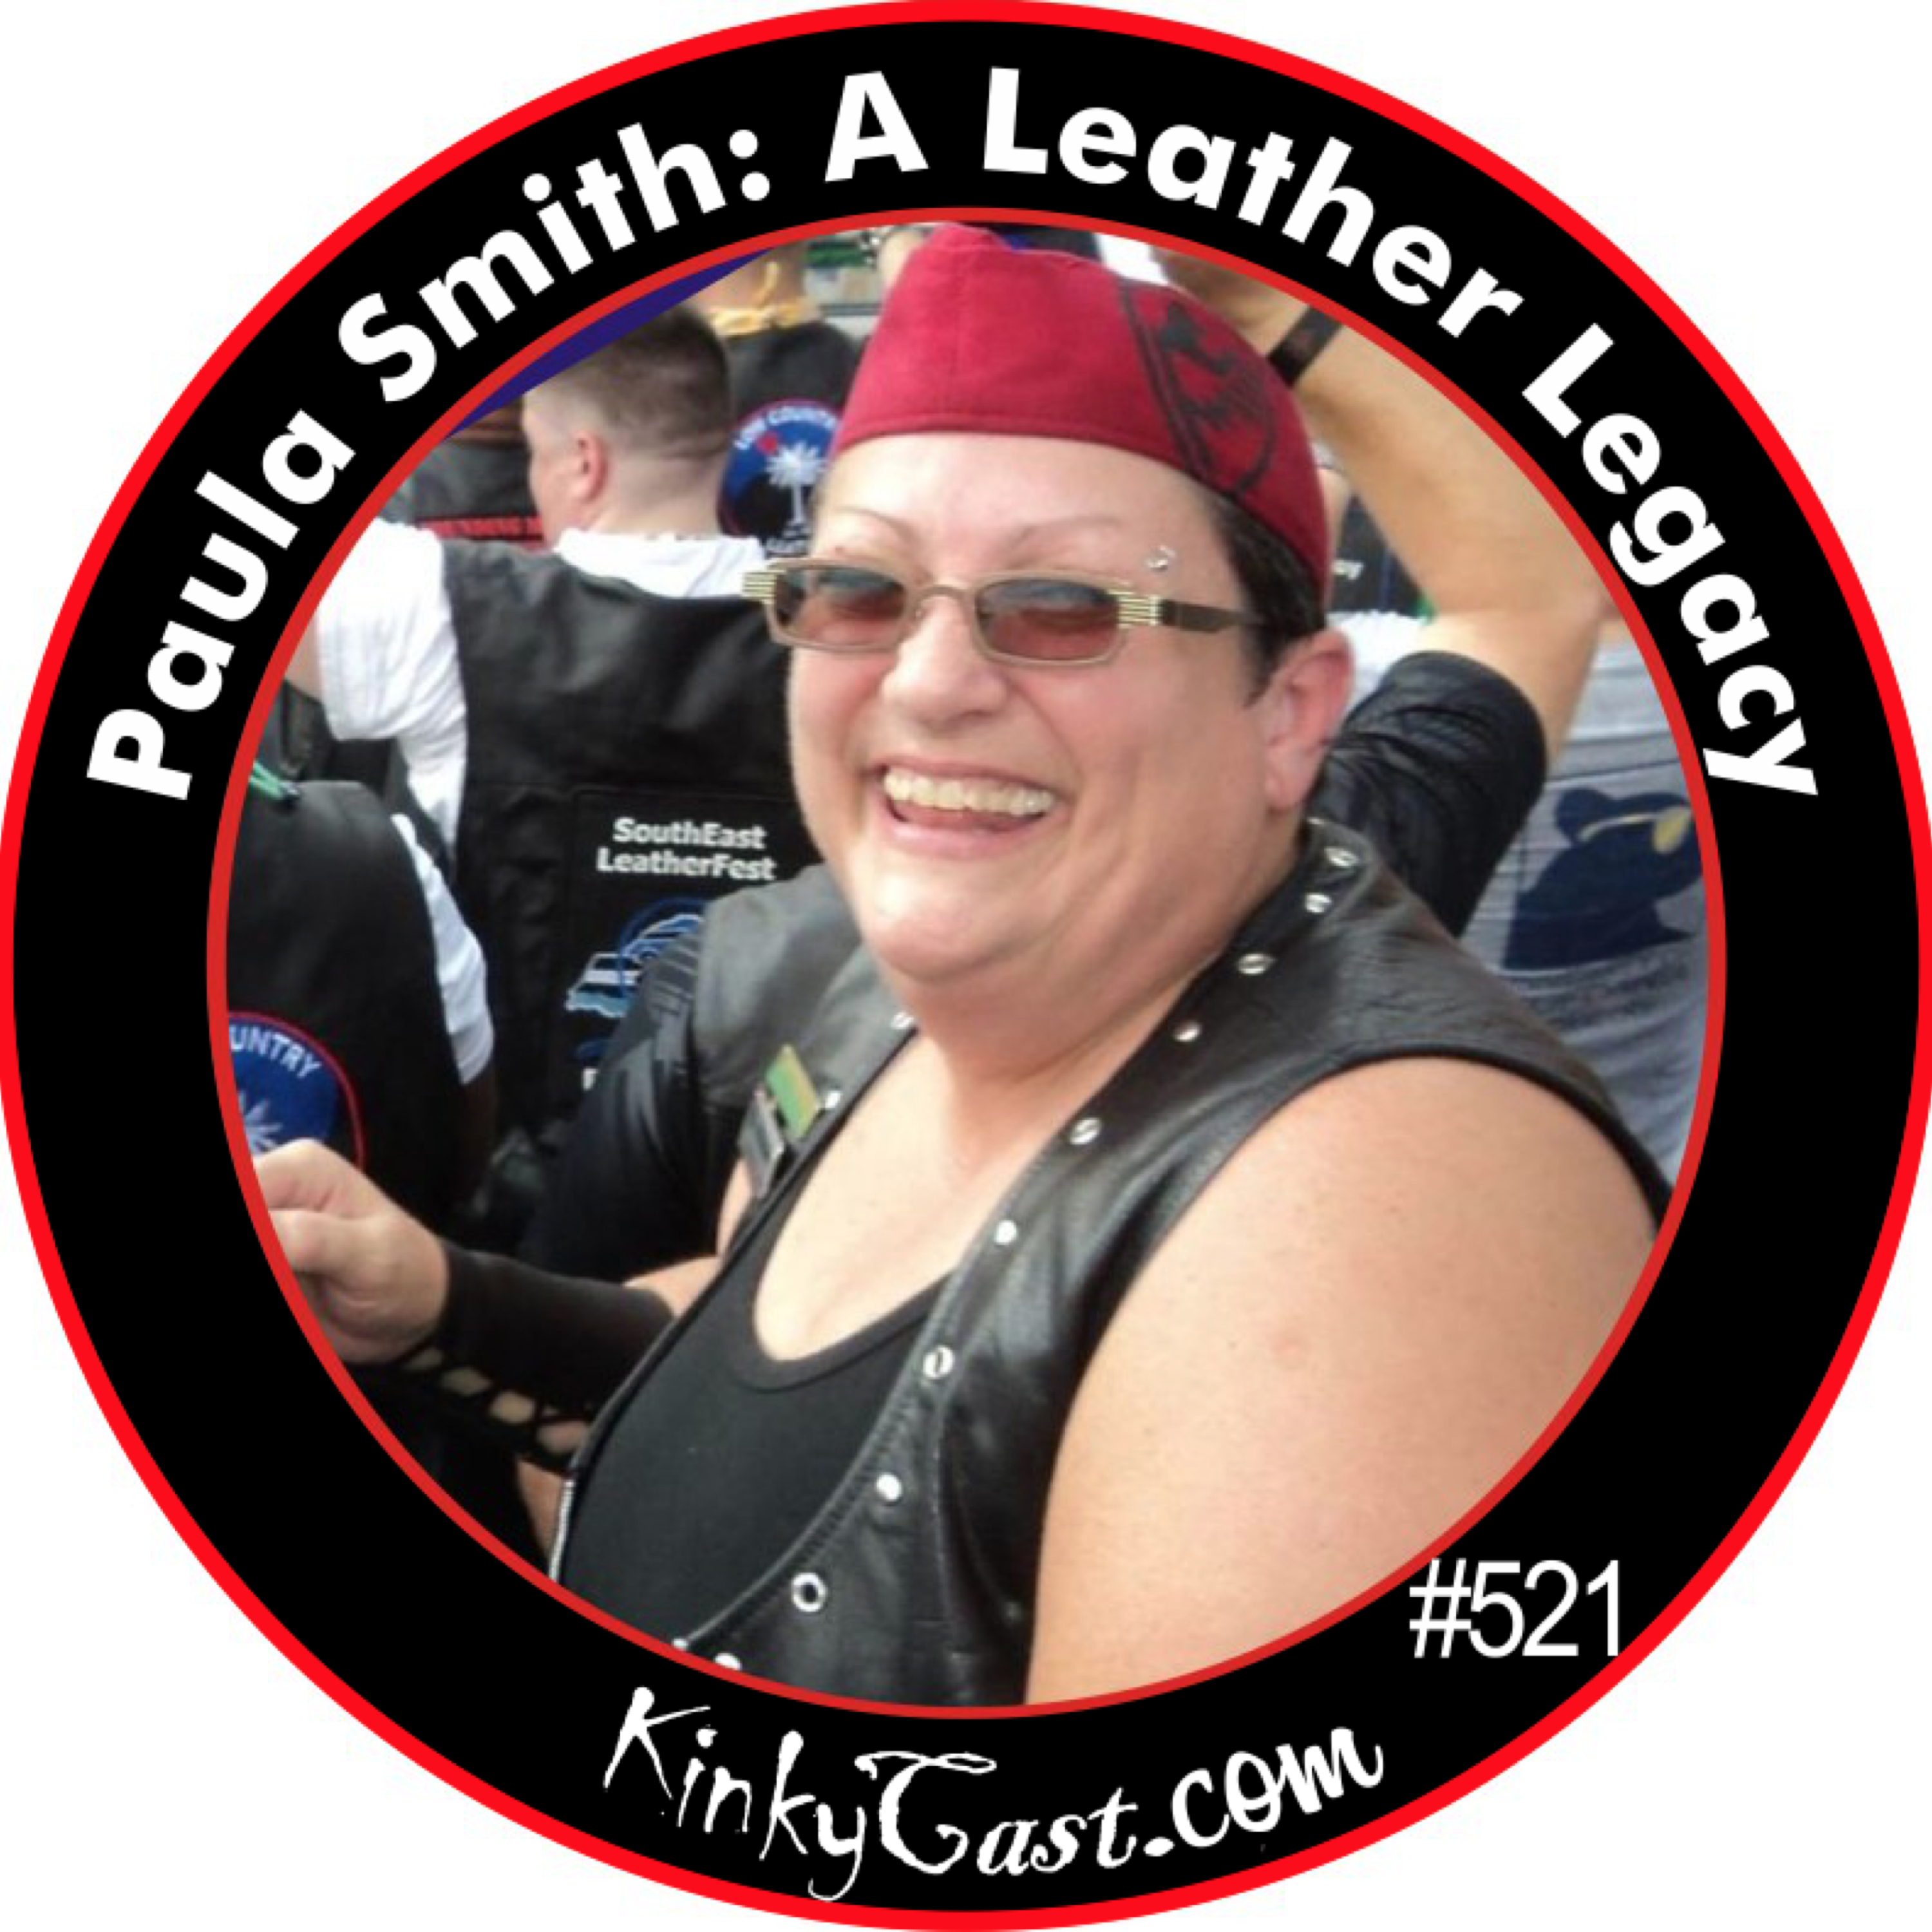 #521 - Paula Smith: A Leather Legacy